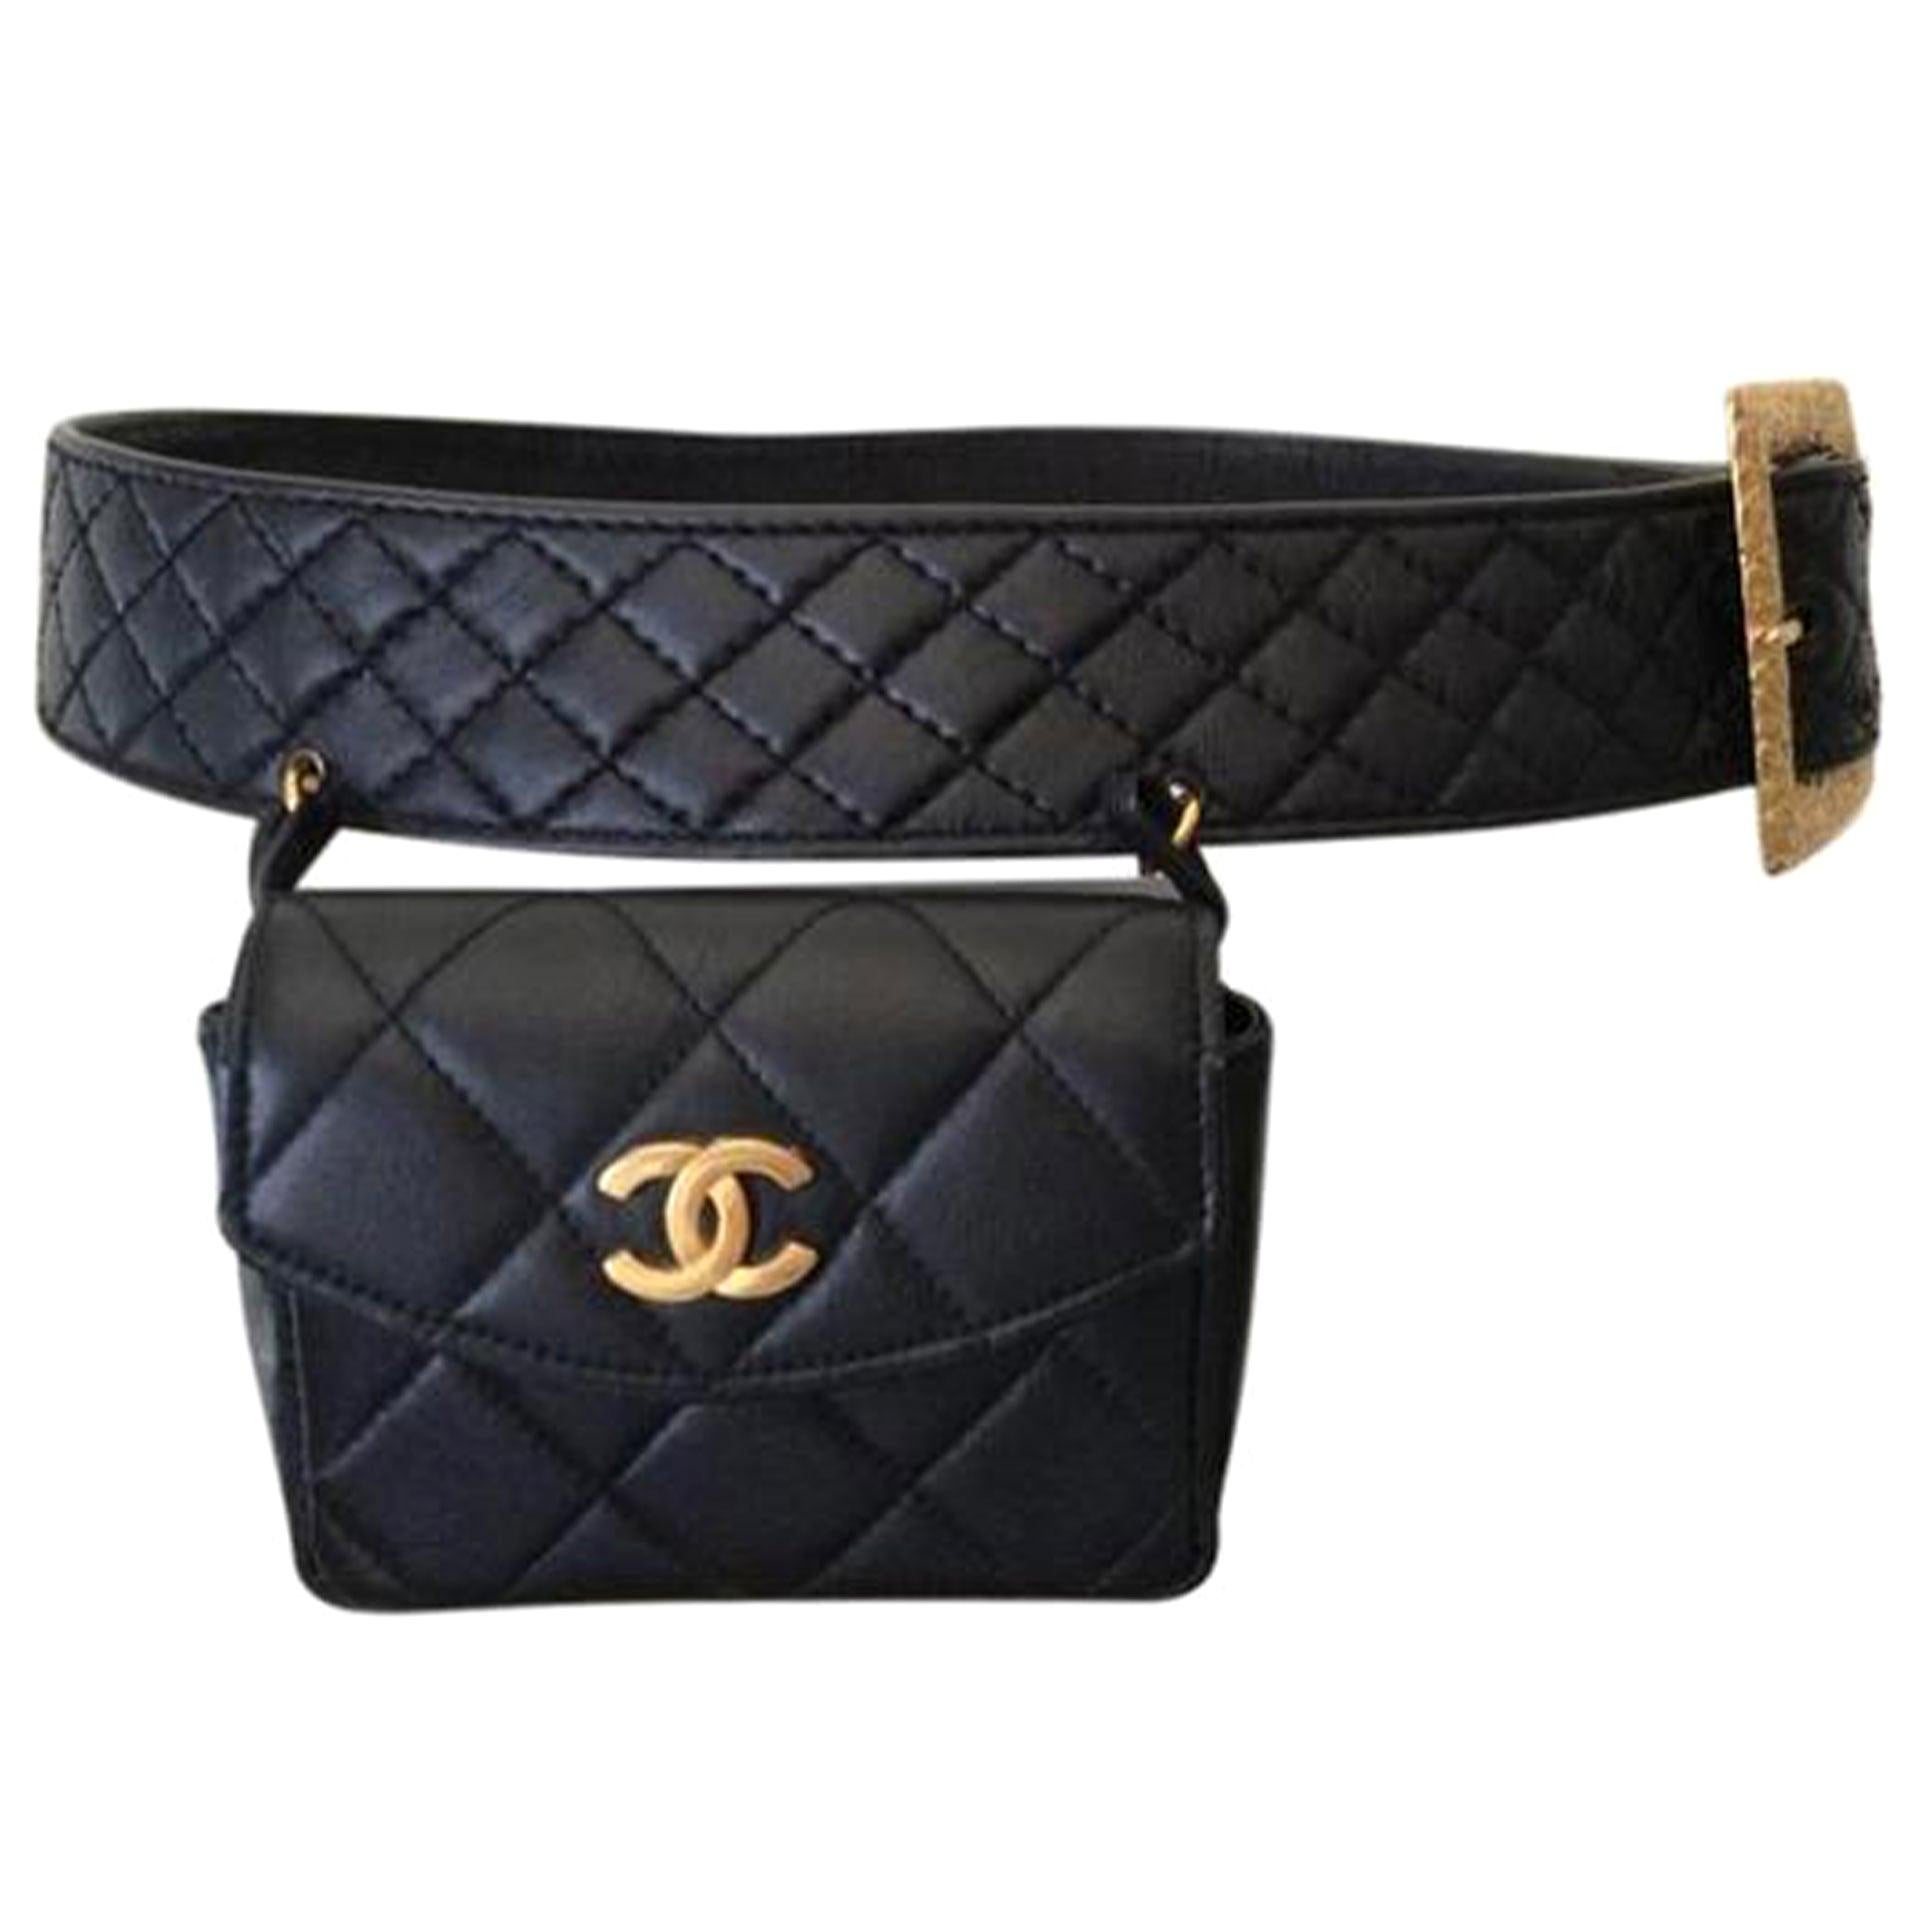 Chanel Belt Bag Rare Vintage 90s Mini Fanny Pack Waist Black Leather Baguette 